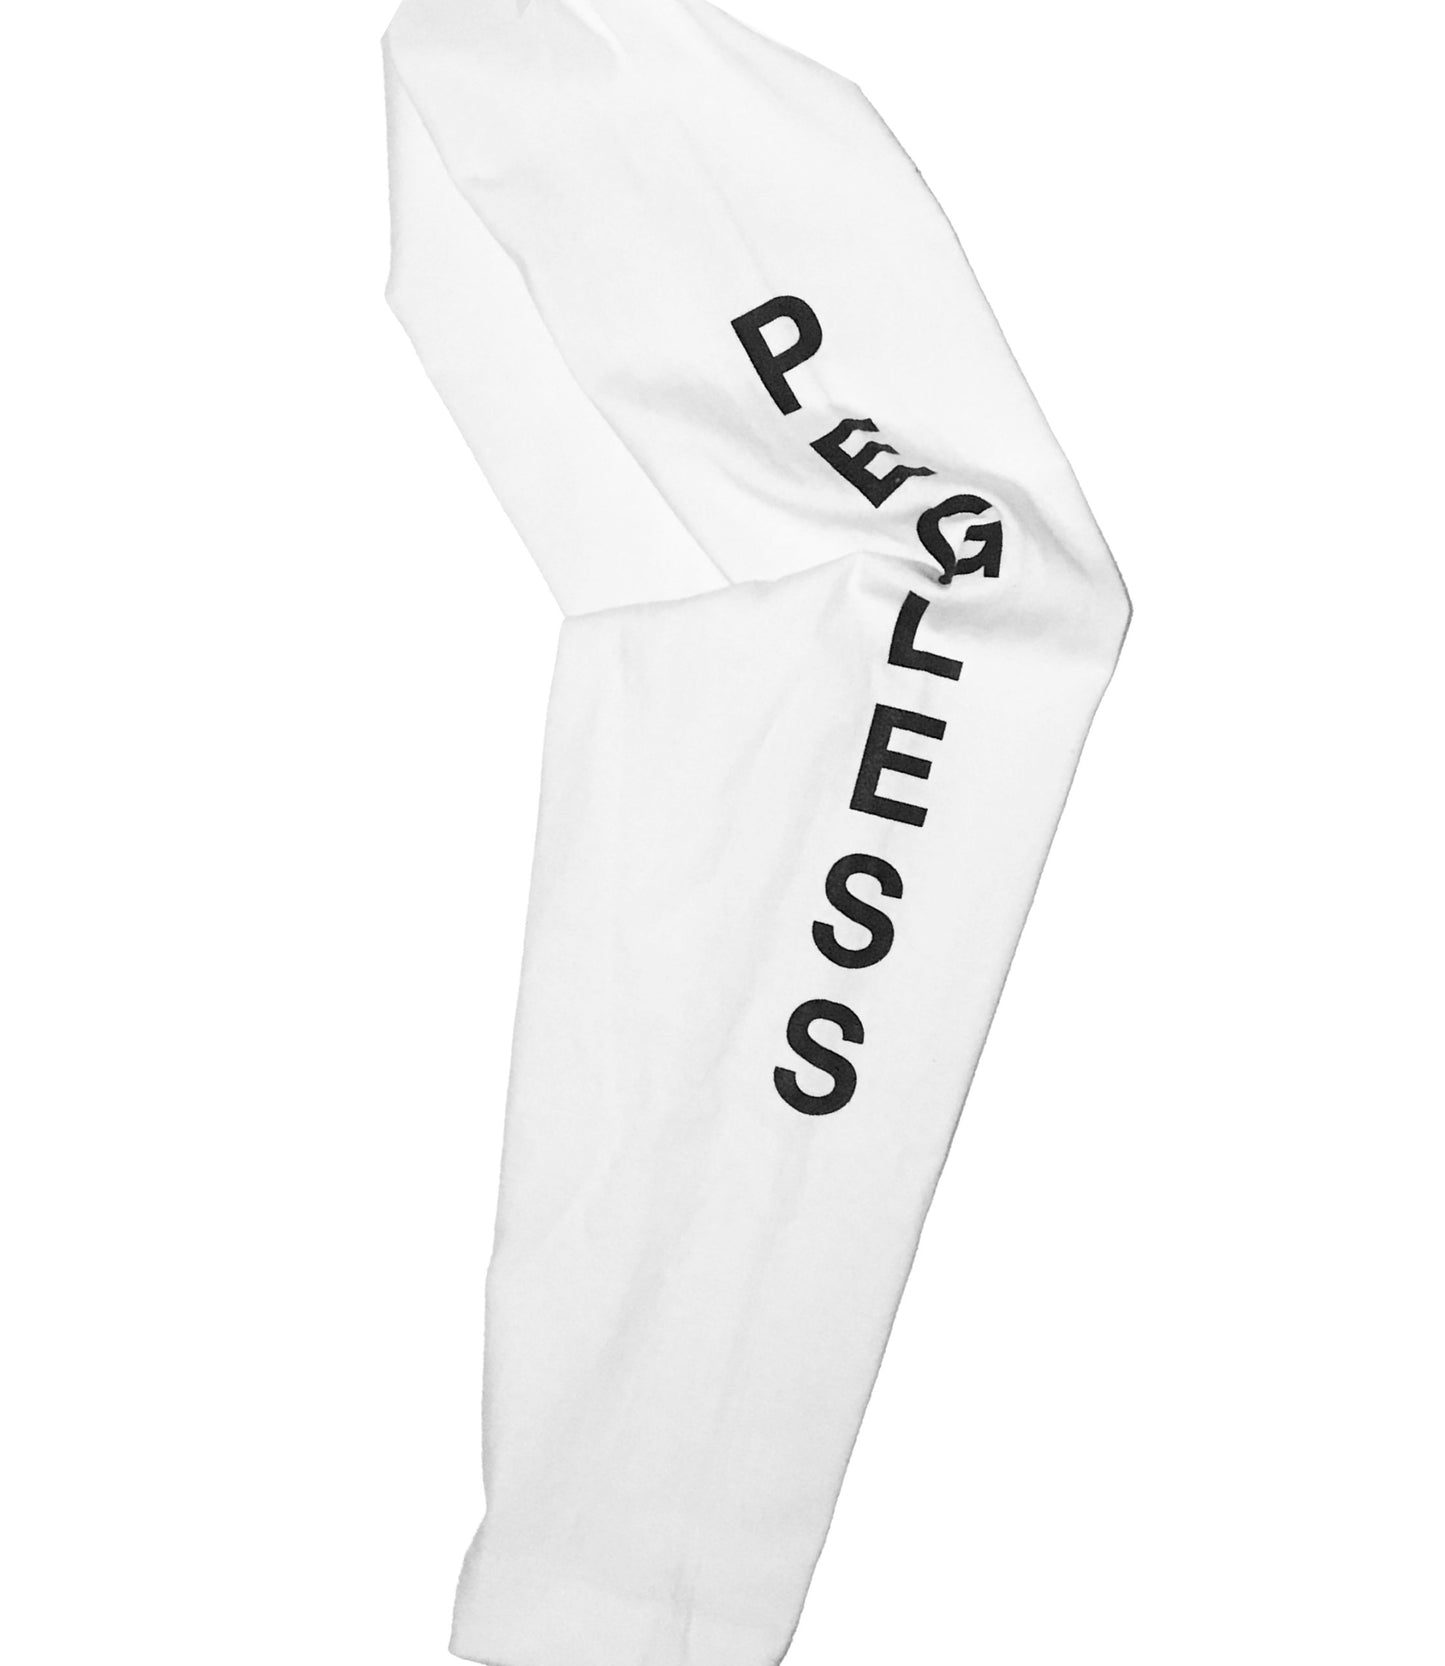 1-800-PEGLESS - Peglock 20s LS T-Shirt/White